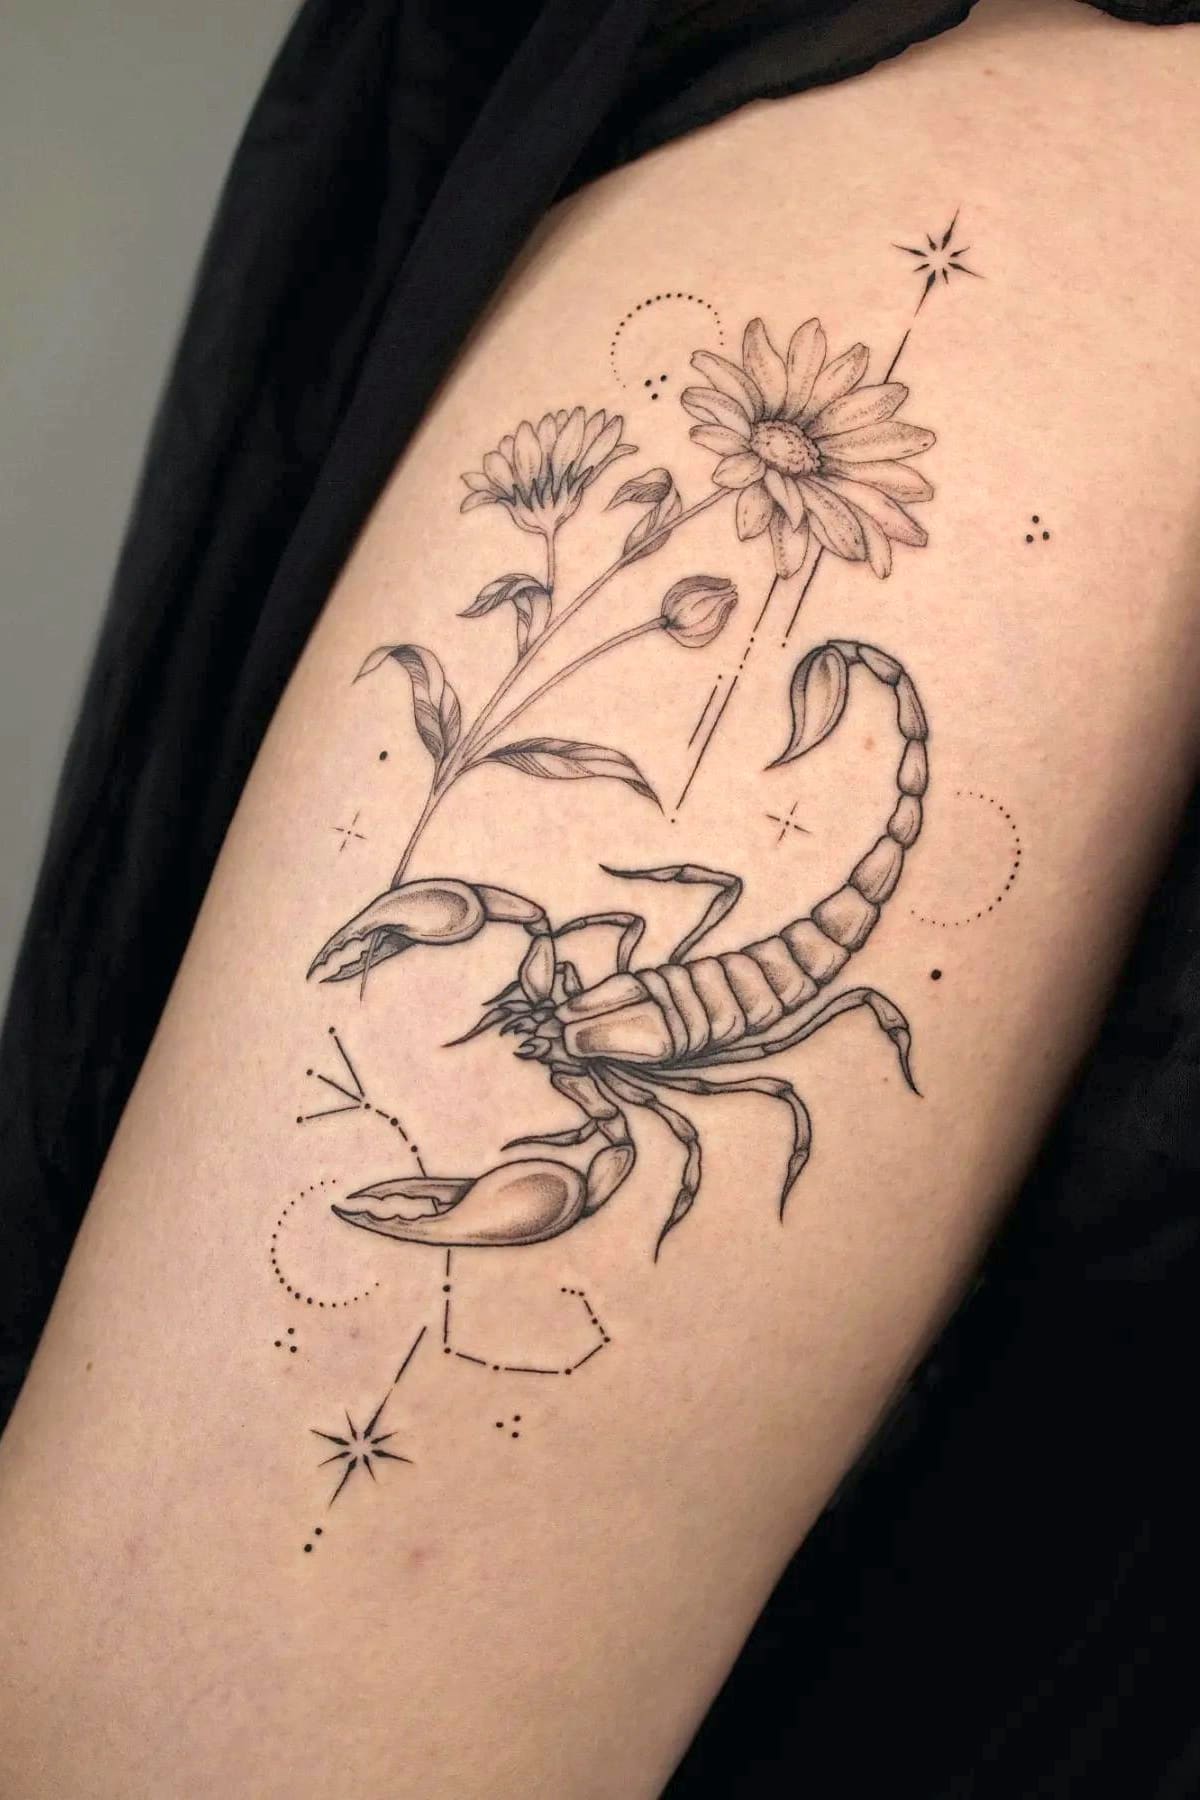 Scorpio tattoo on Arm